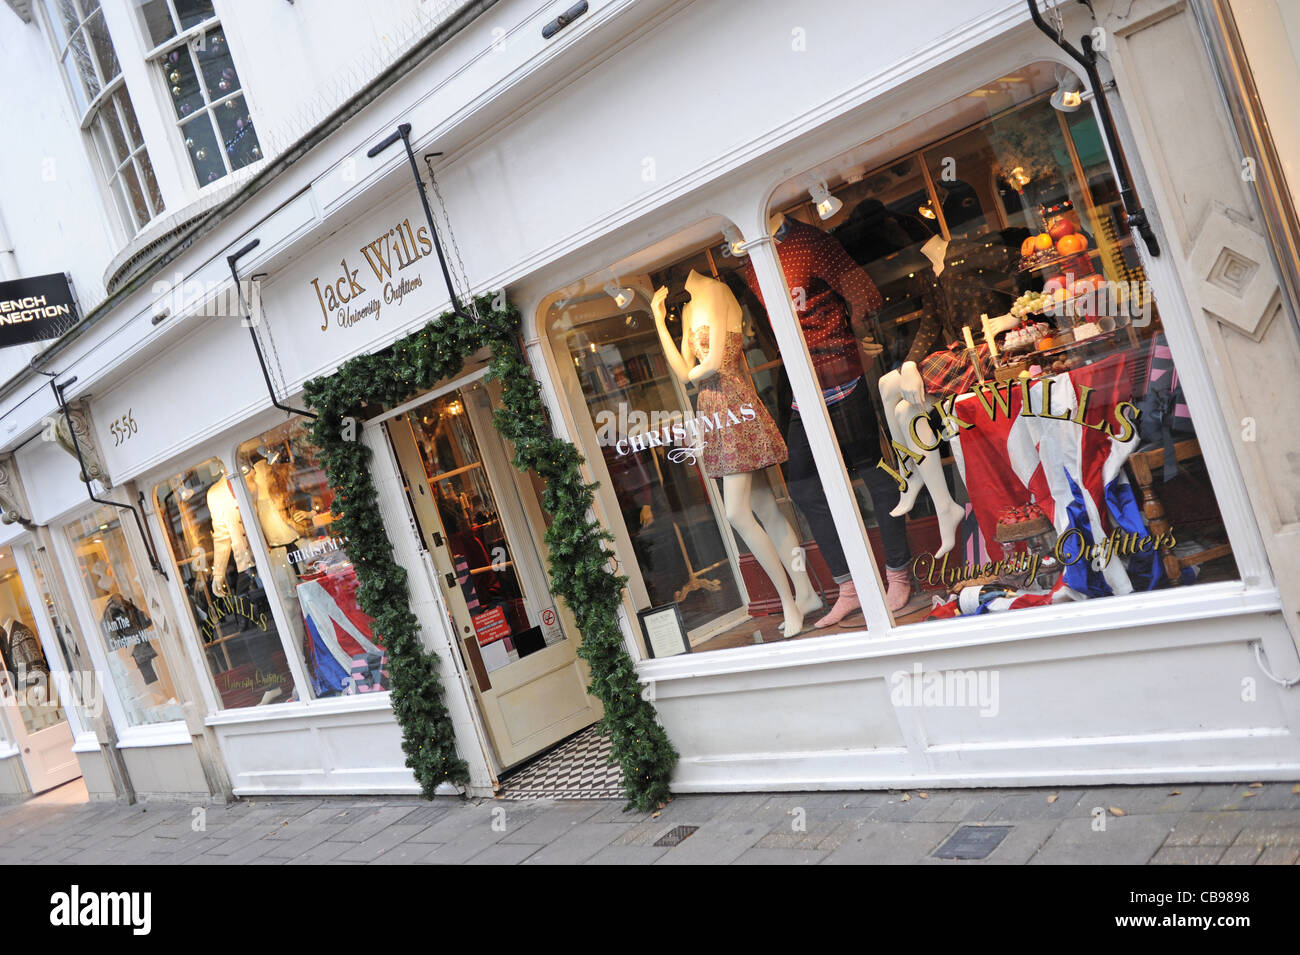 Jack Wills Fashion clothing store East Street Brighton UK Photograph taken  December 2011 Stock Photo - Alamy